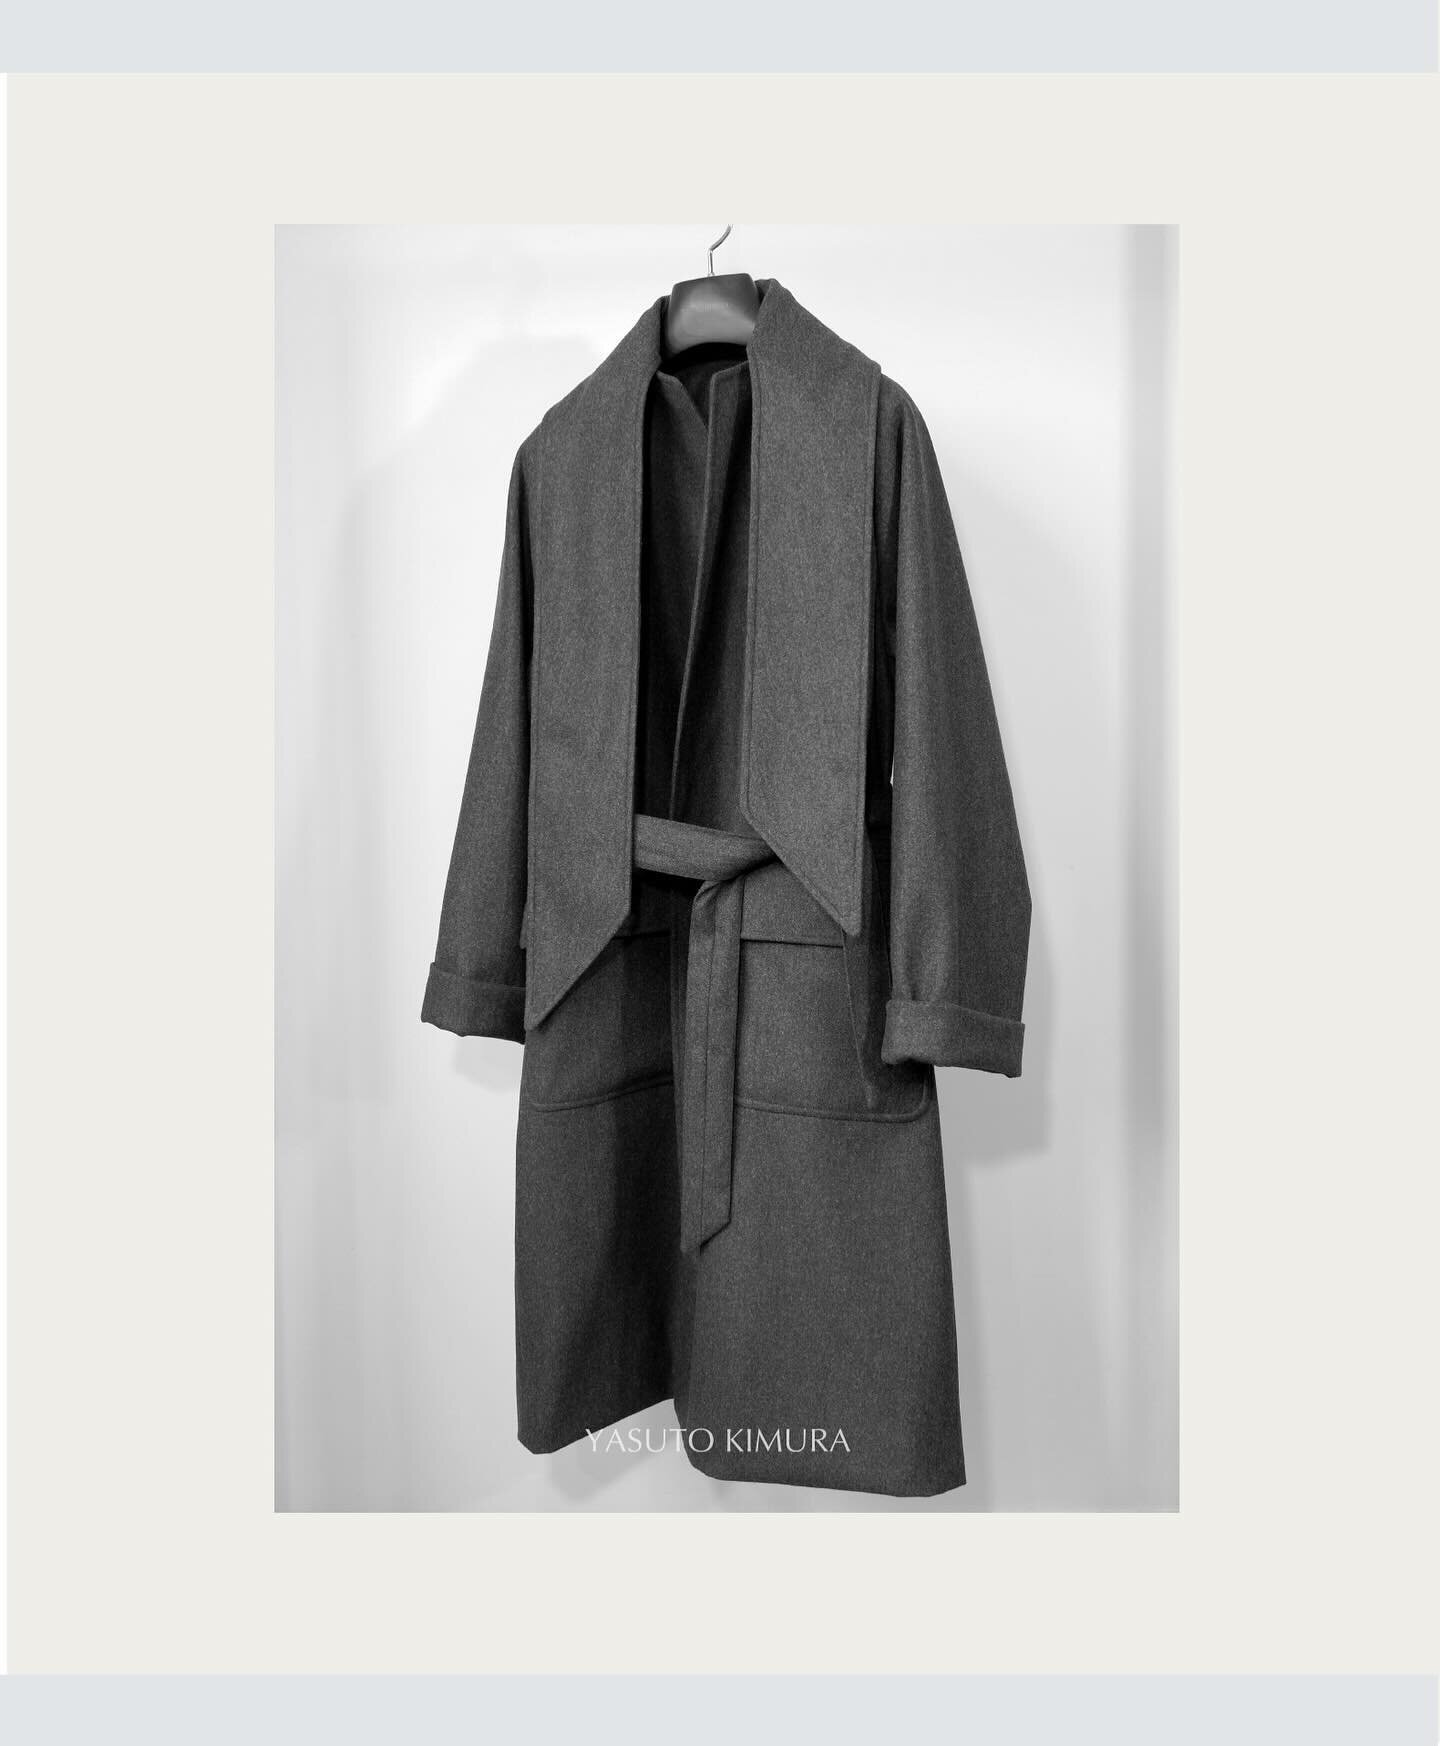 Balmacaan coat with scarf #yasutokimura #overcoat #balmacaancoat #madetoorder #tailormade #unisexclothing